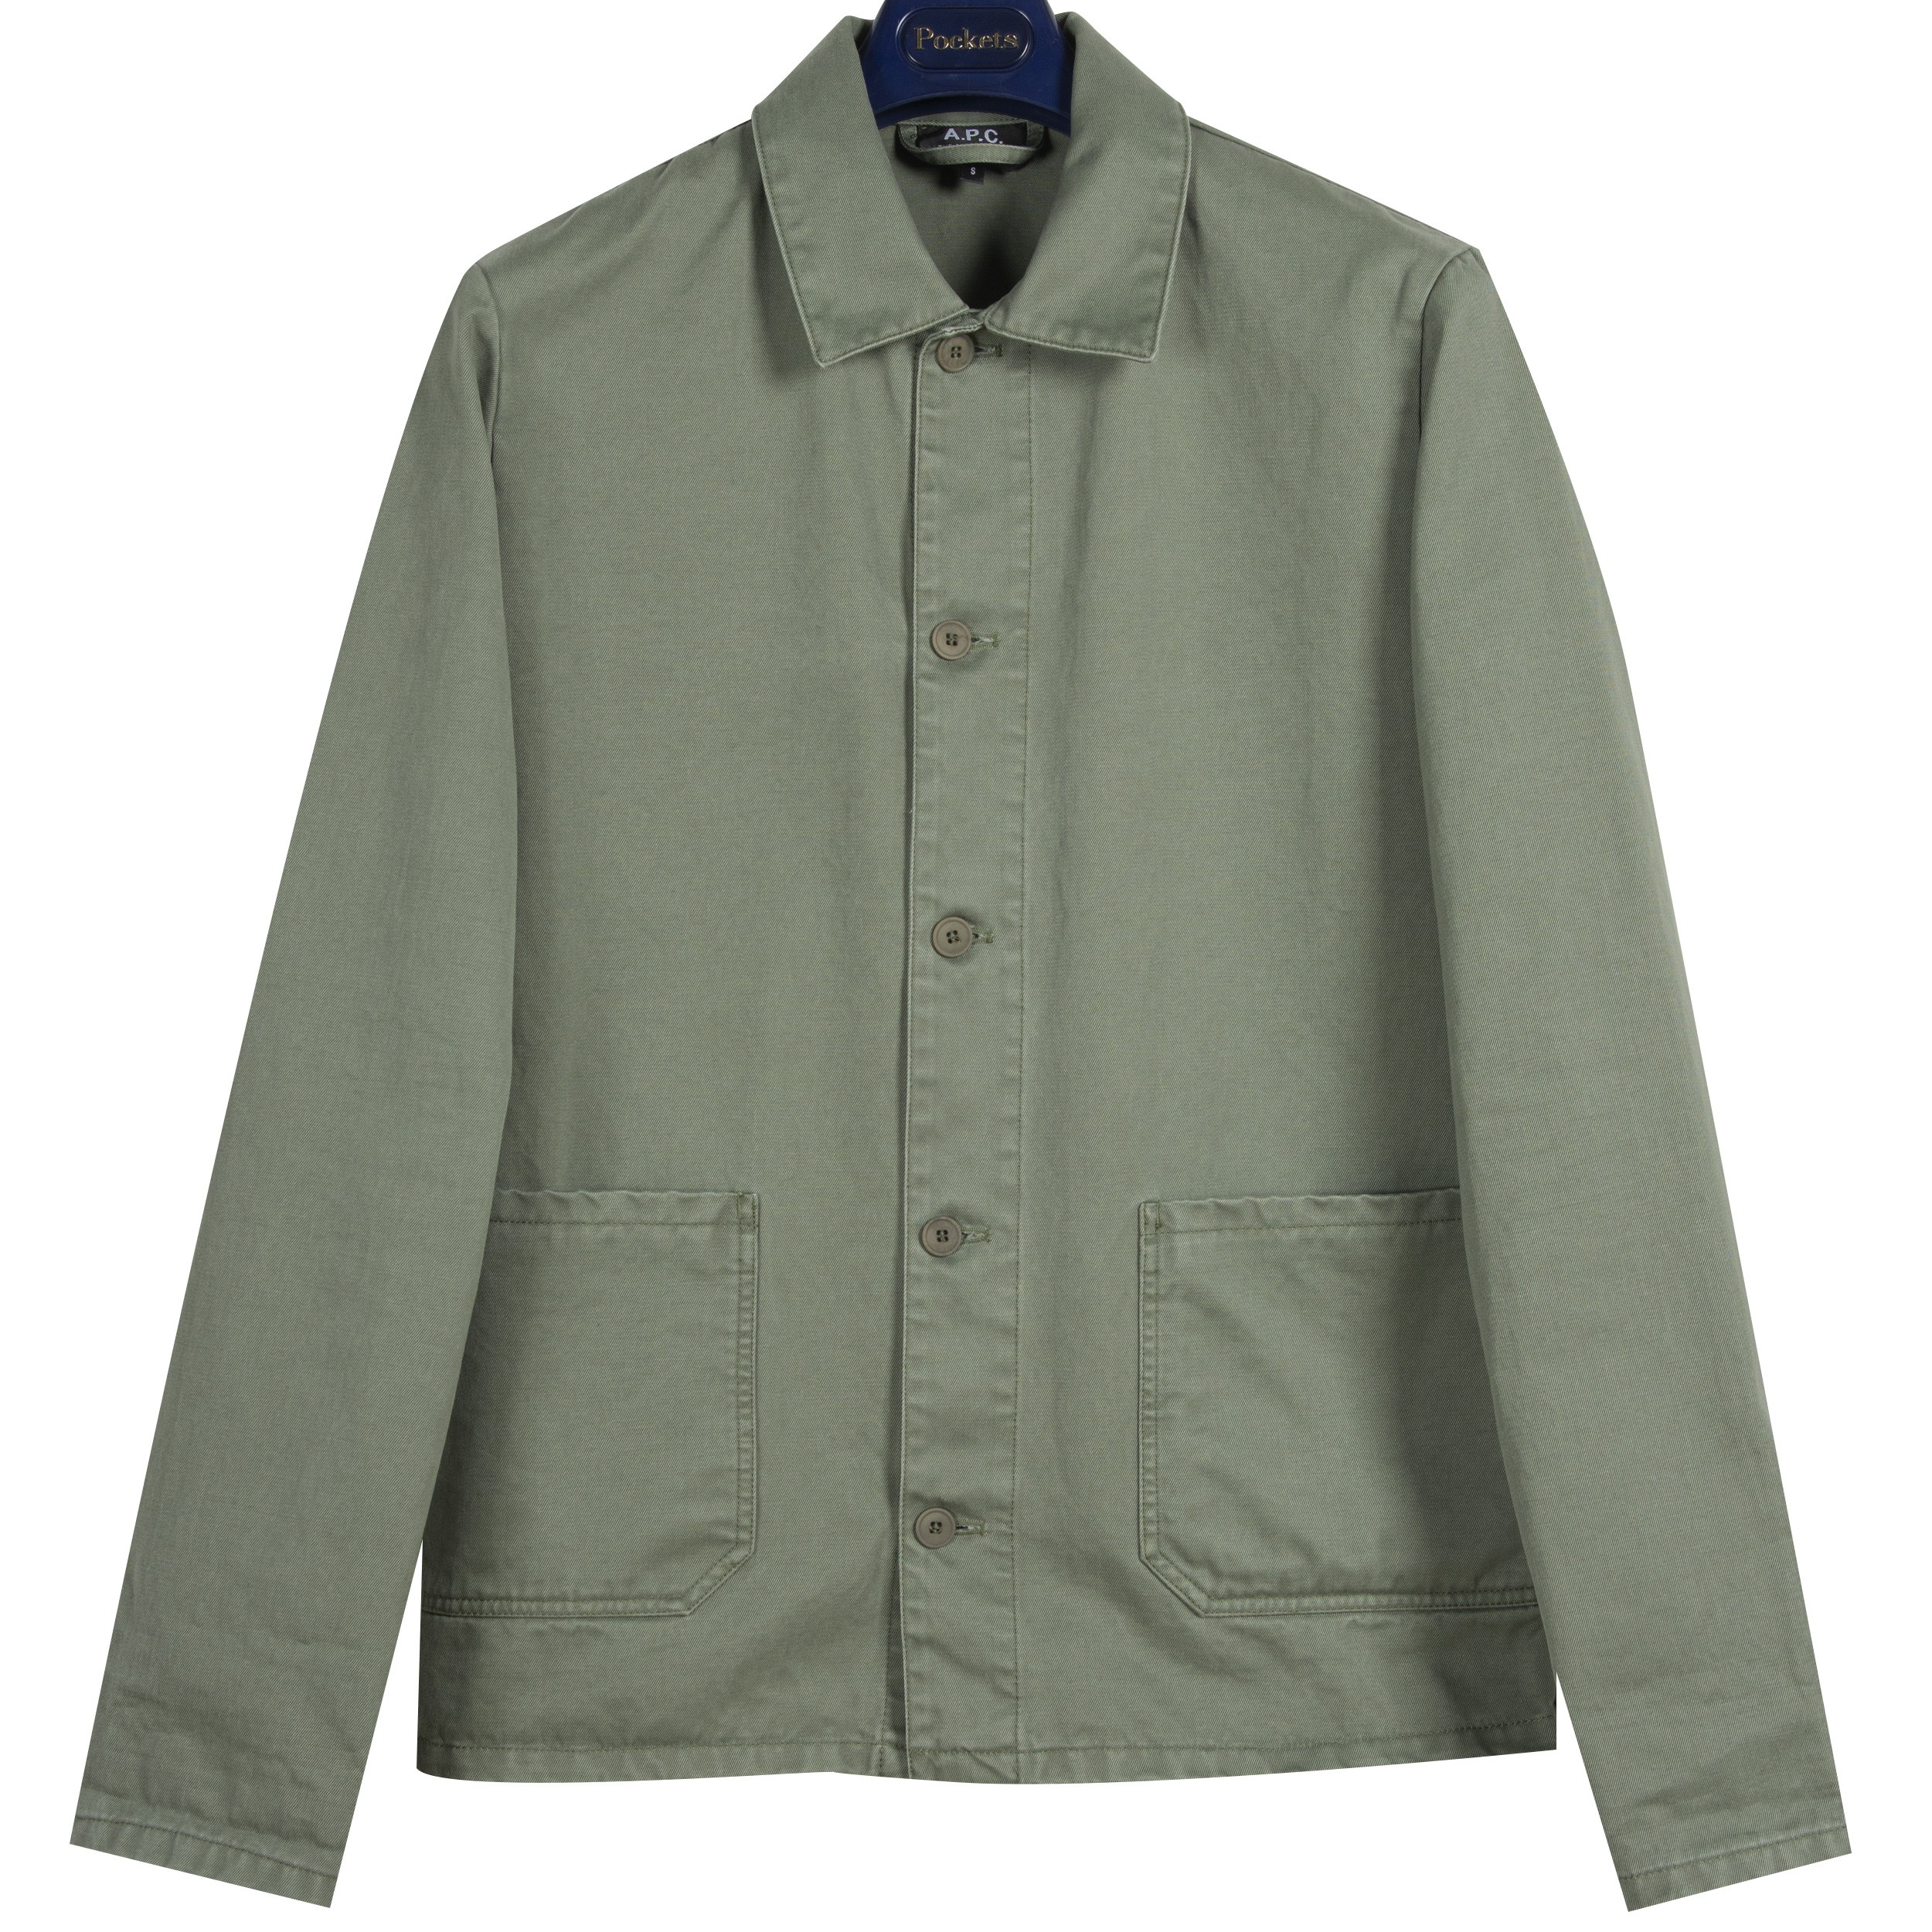 A.P.C. 'Veste Kerlouan' Jacket With Patch Pockets Washed Khaki